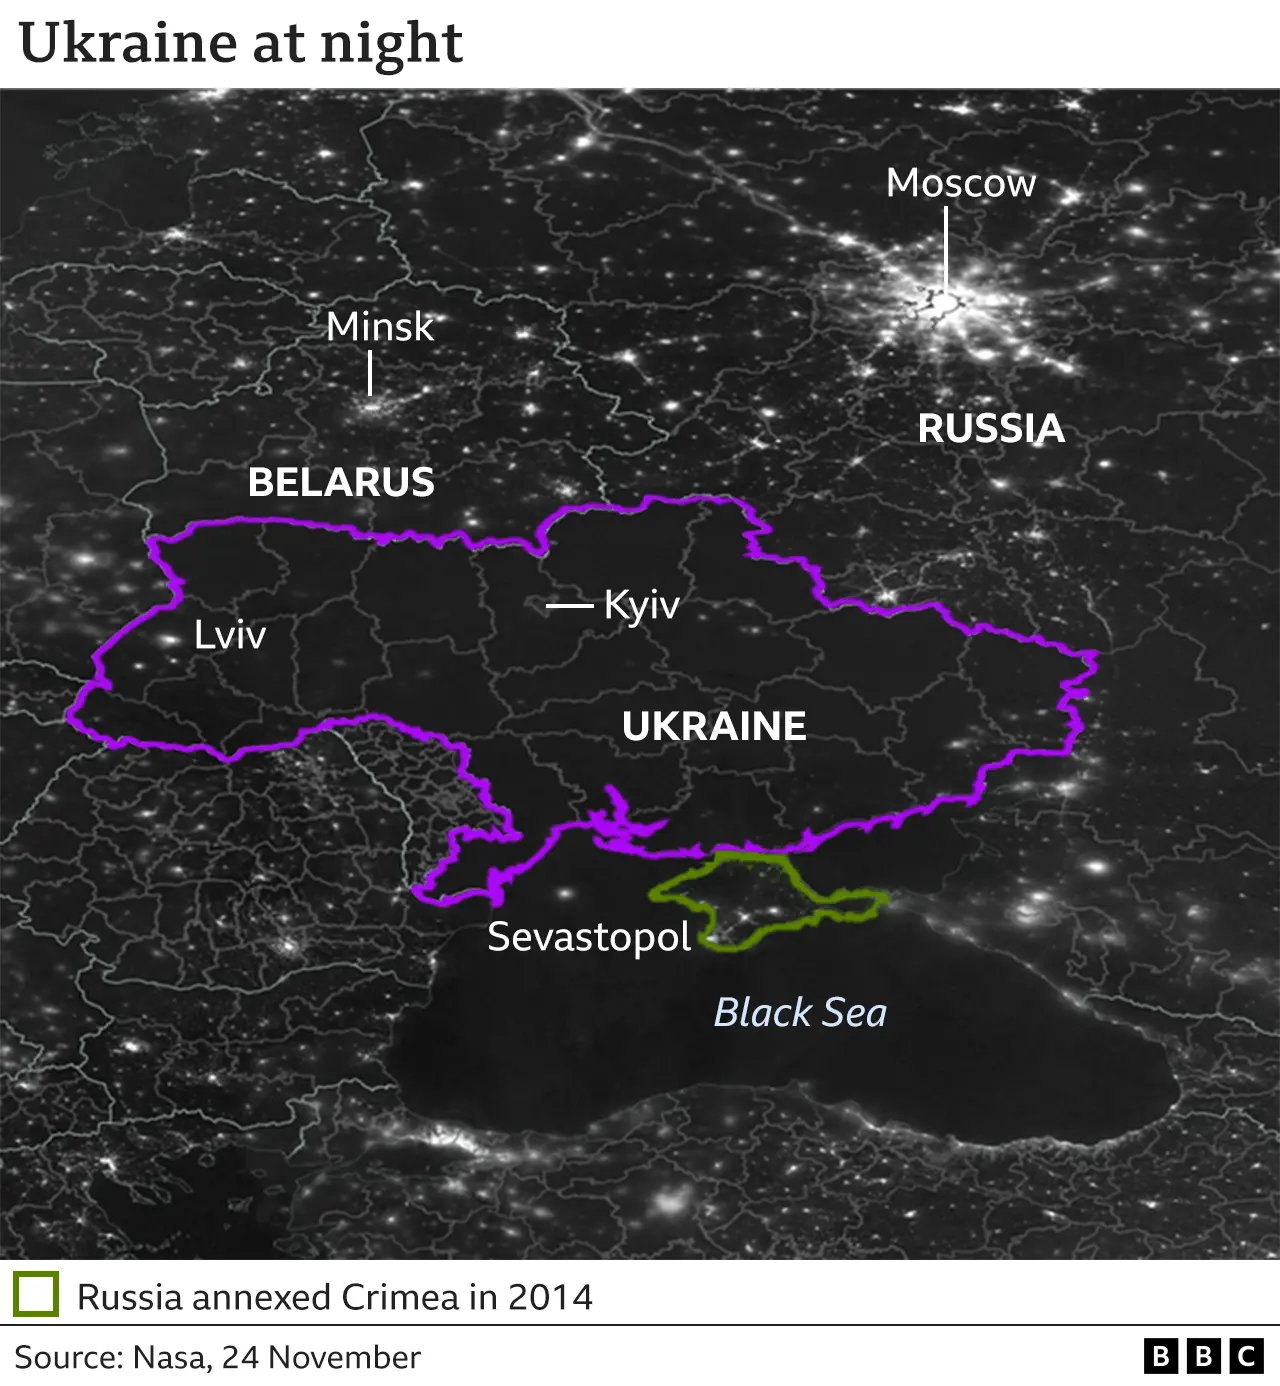 _127784435_ukraine_night_time_satellite_image_v3_640-2x-nc.png.webp